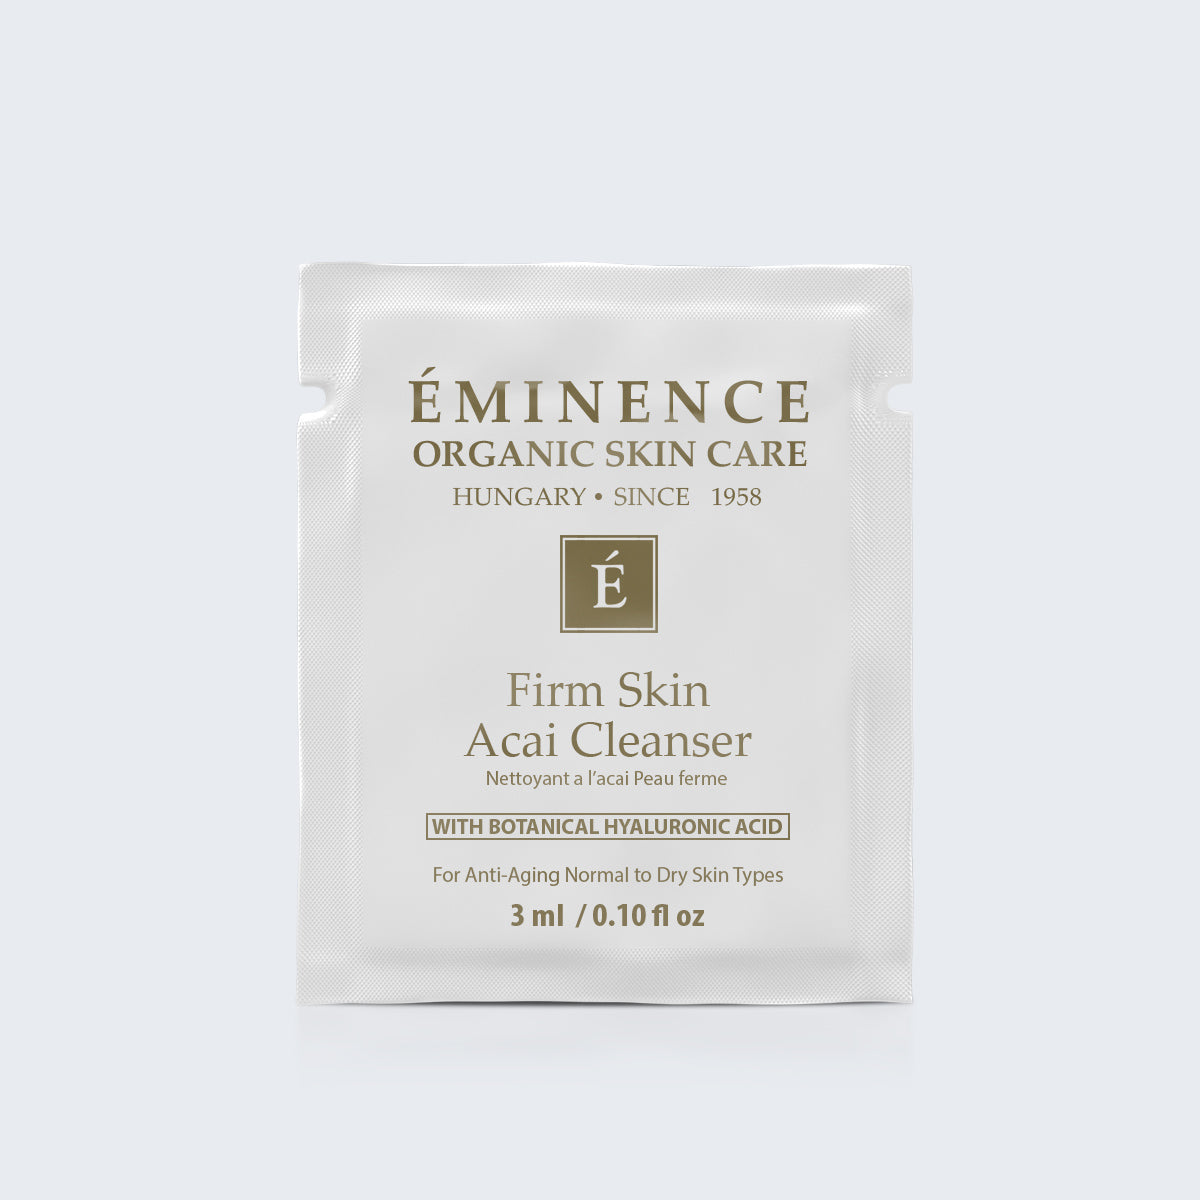 Eminence Organics Firm Skin Acai Cleanser Card Sample